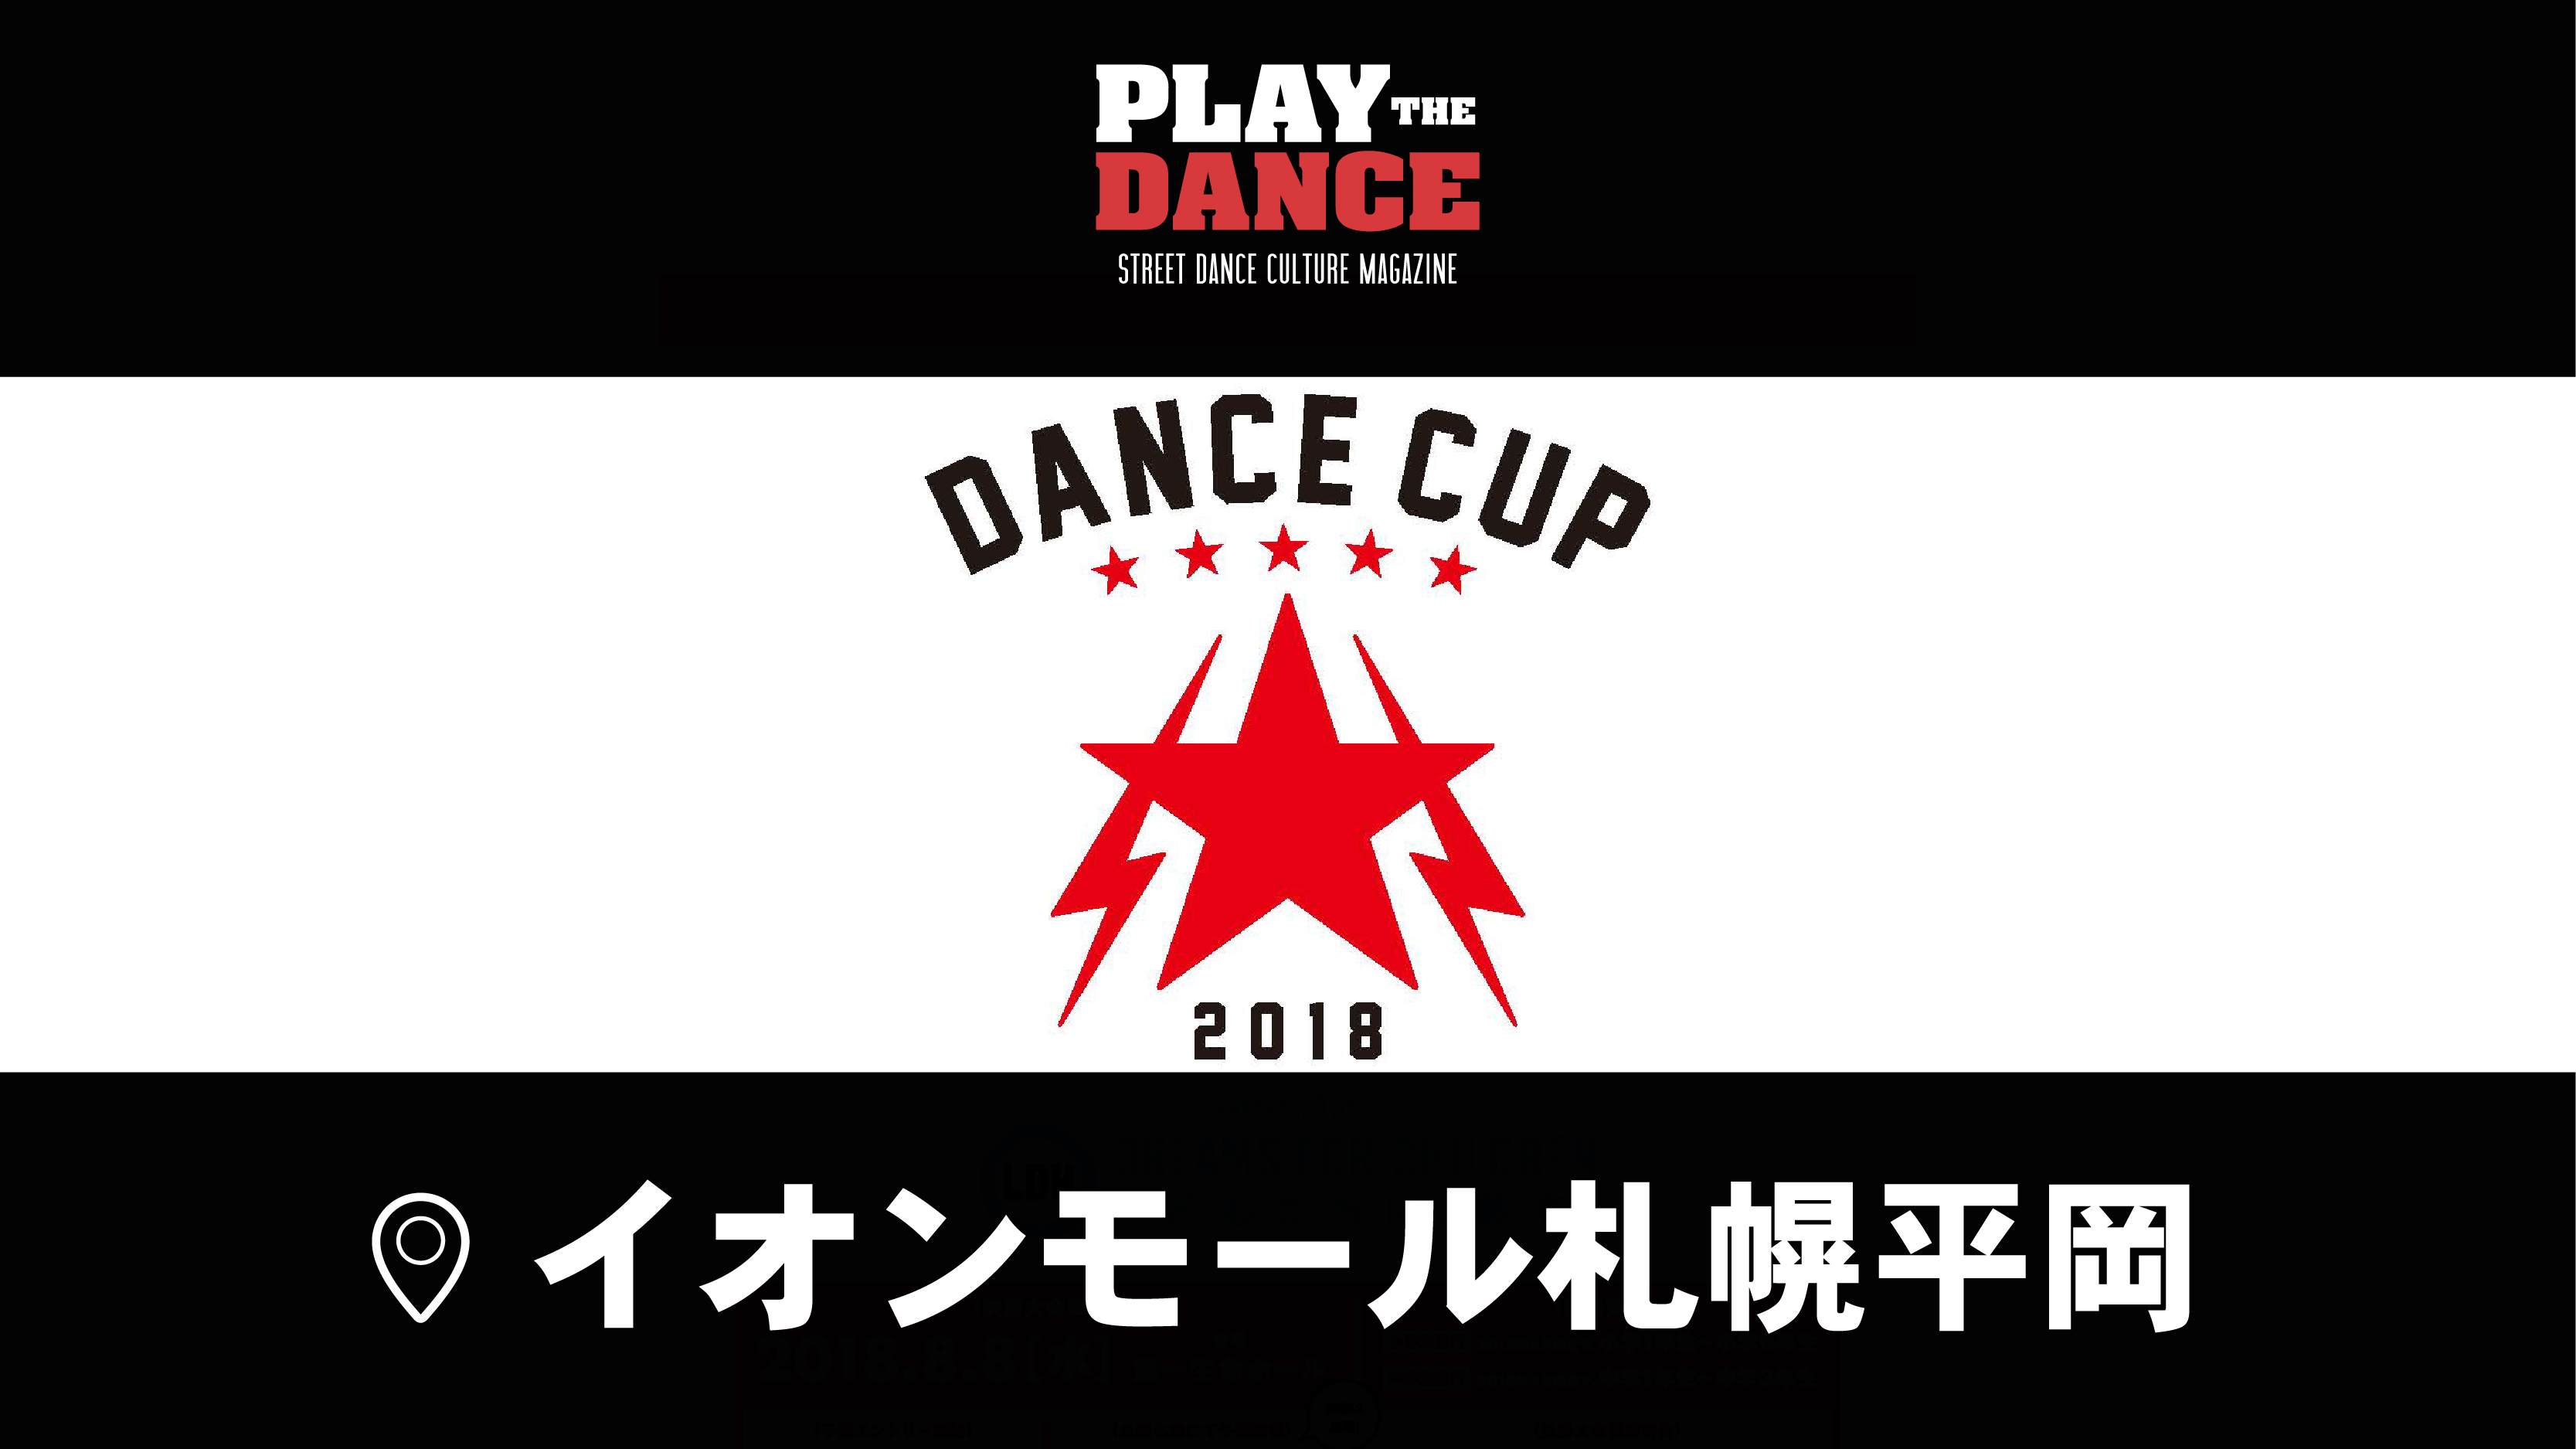 DANCE CUP 2018